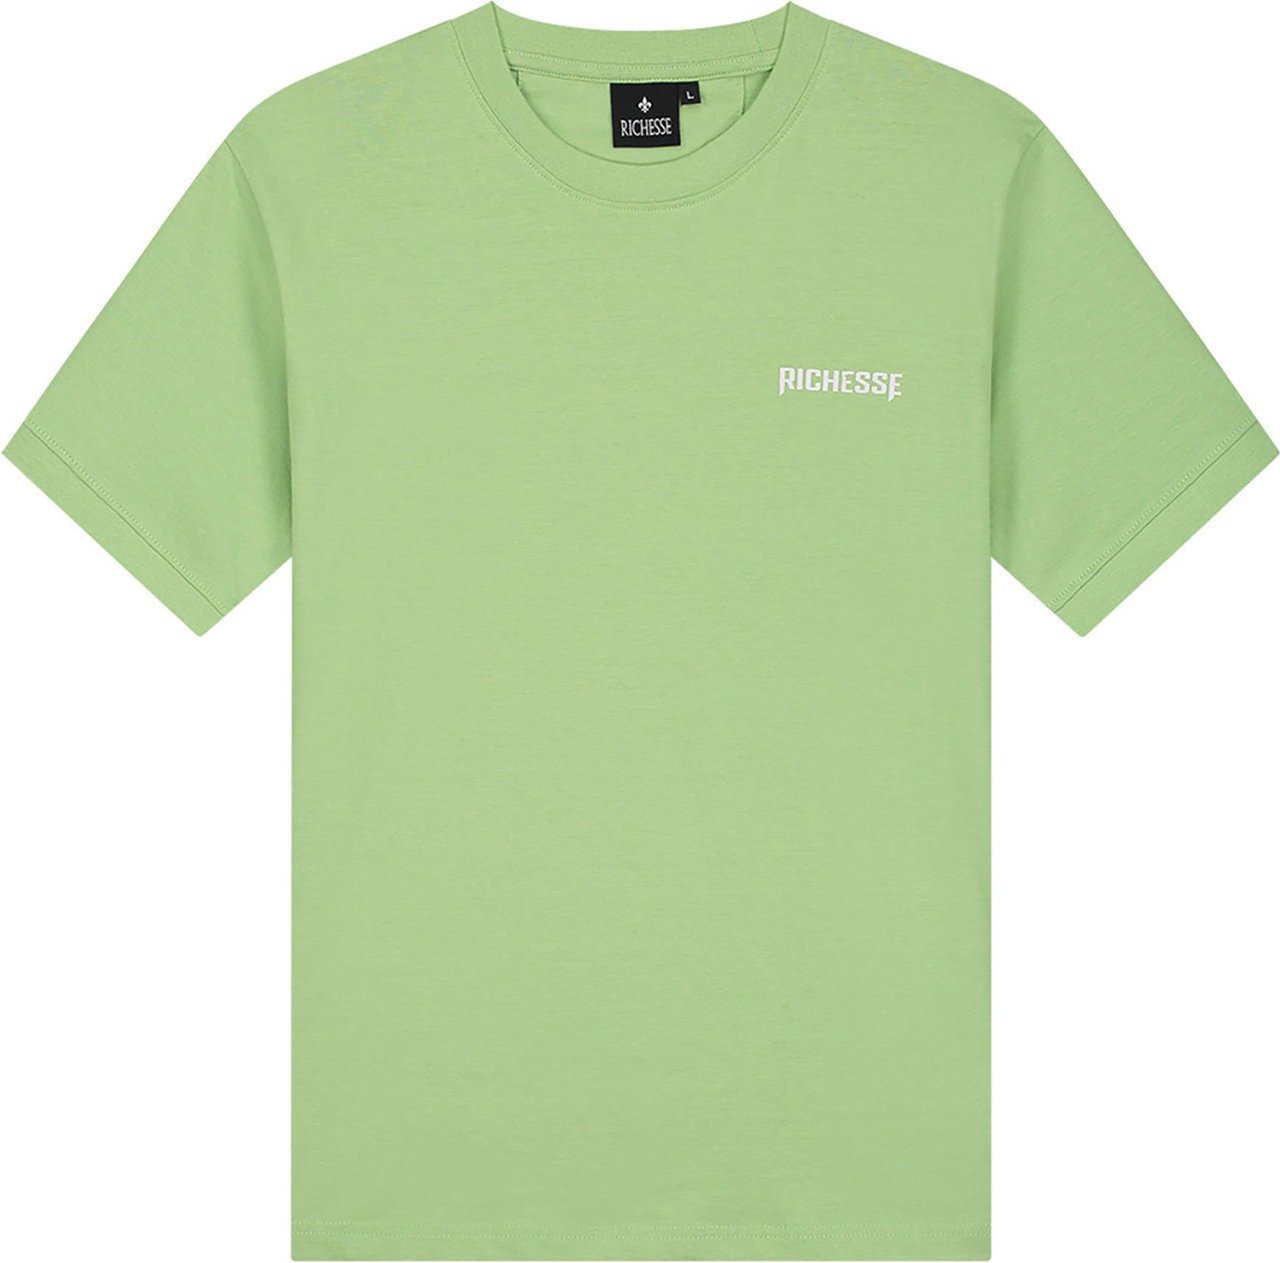 Richesse Promised Green T-shirt Groen